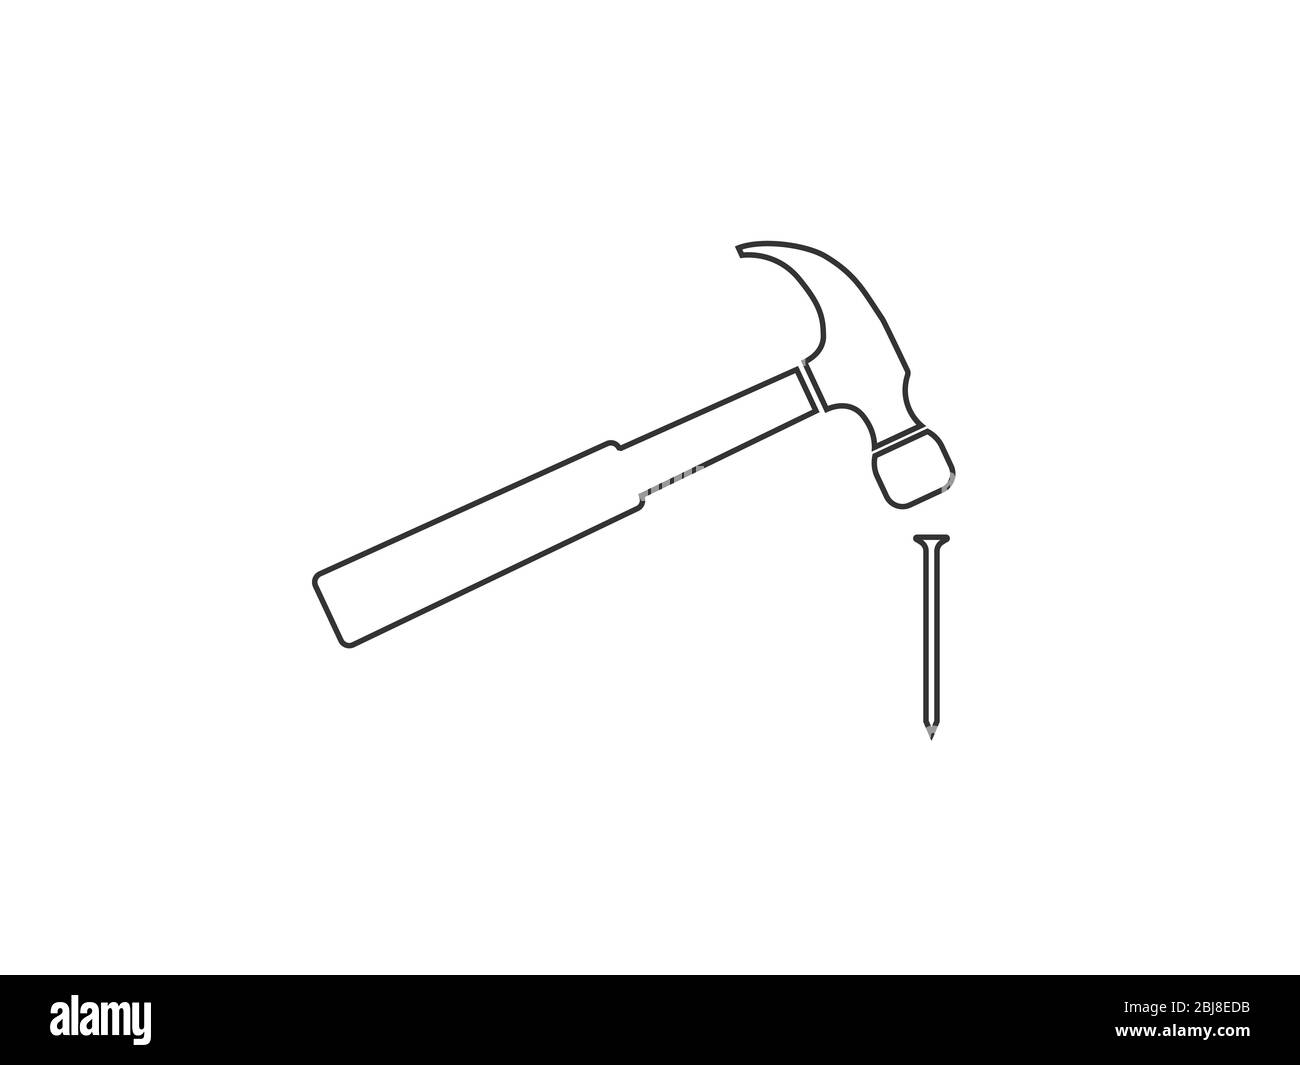 Hammer, Nagel-Symbol. Vektorgrafik, flaches Design Stock-Vektorgrafik -  Alamy